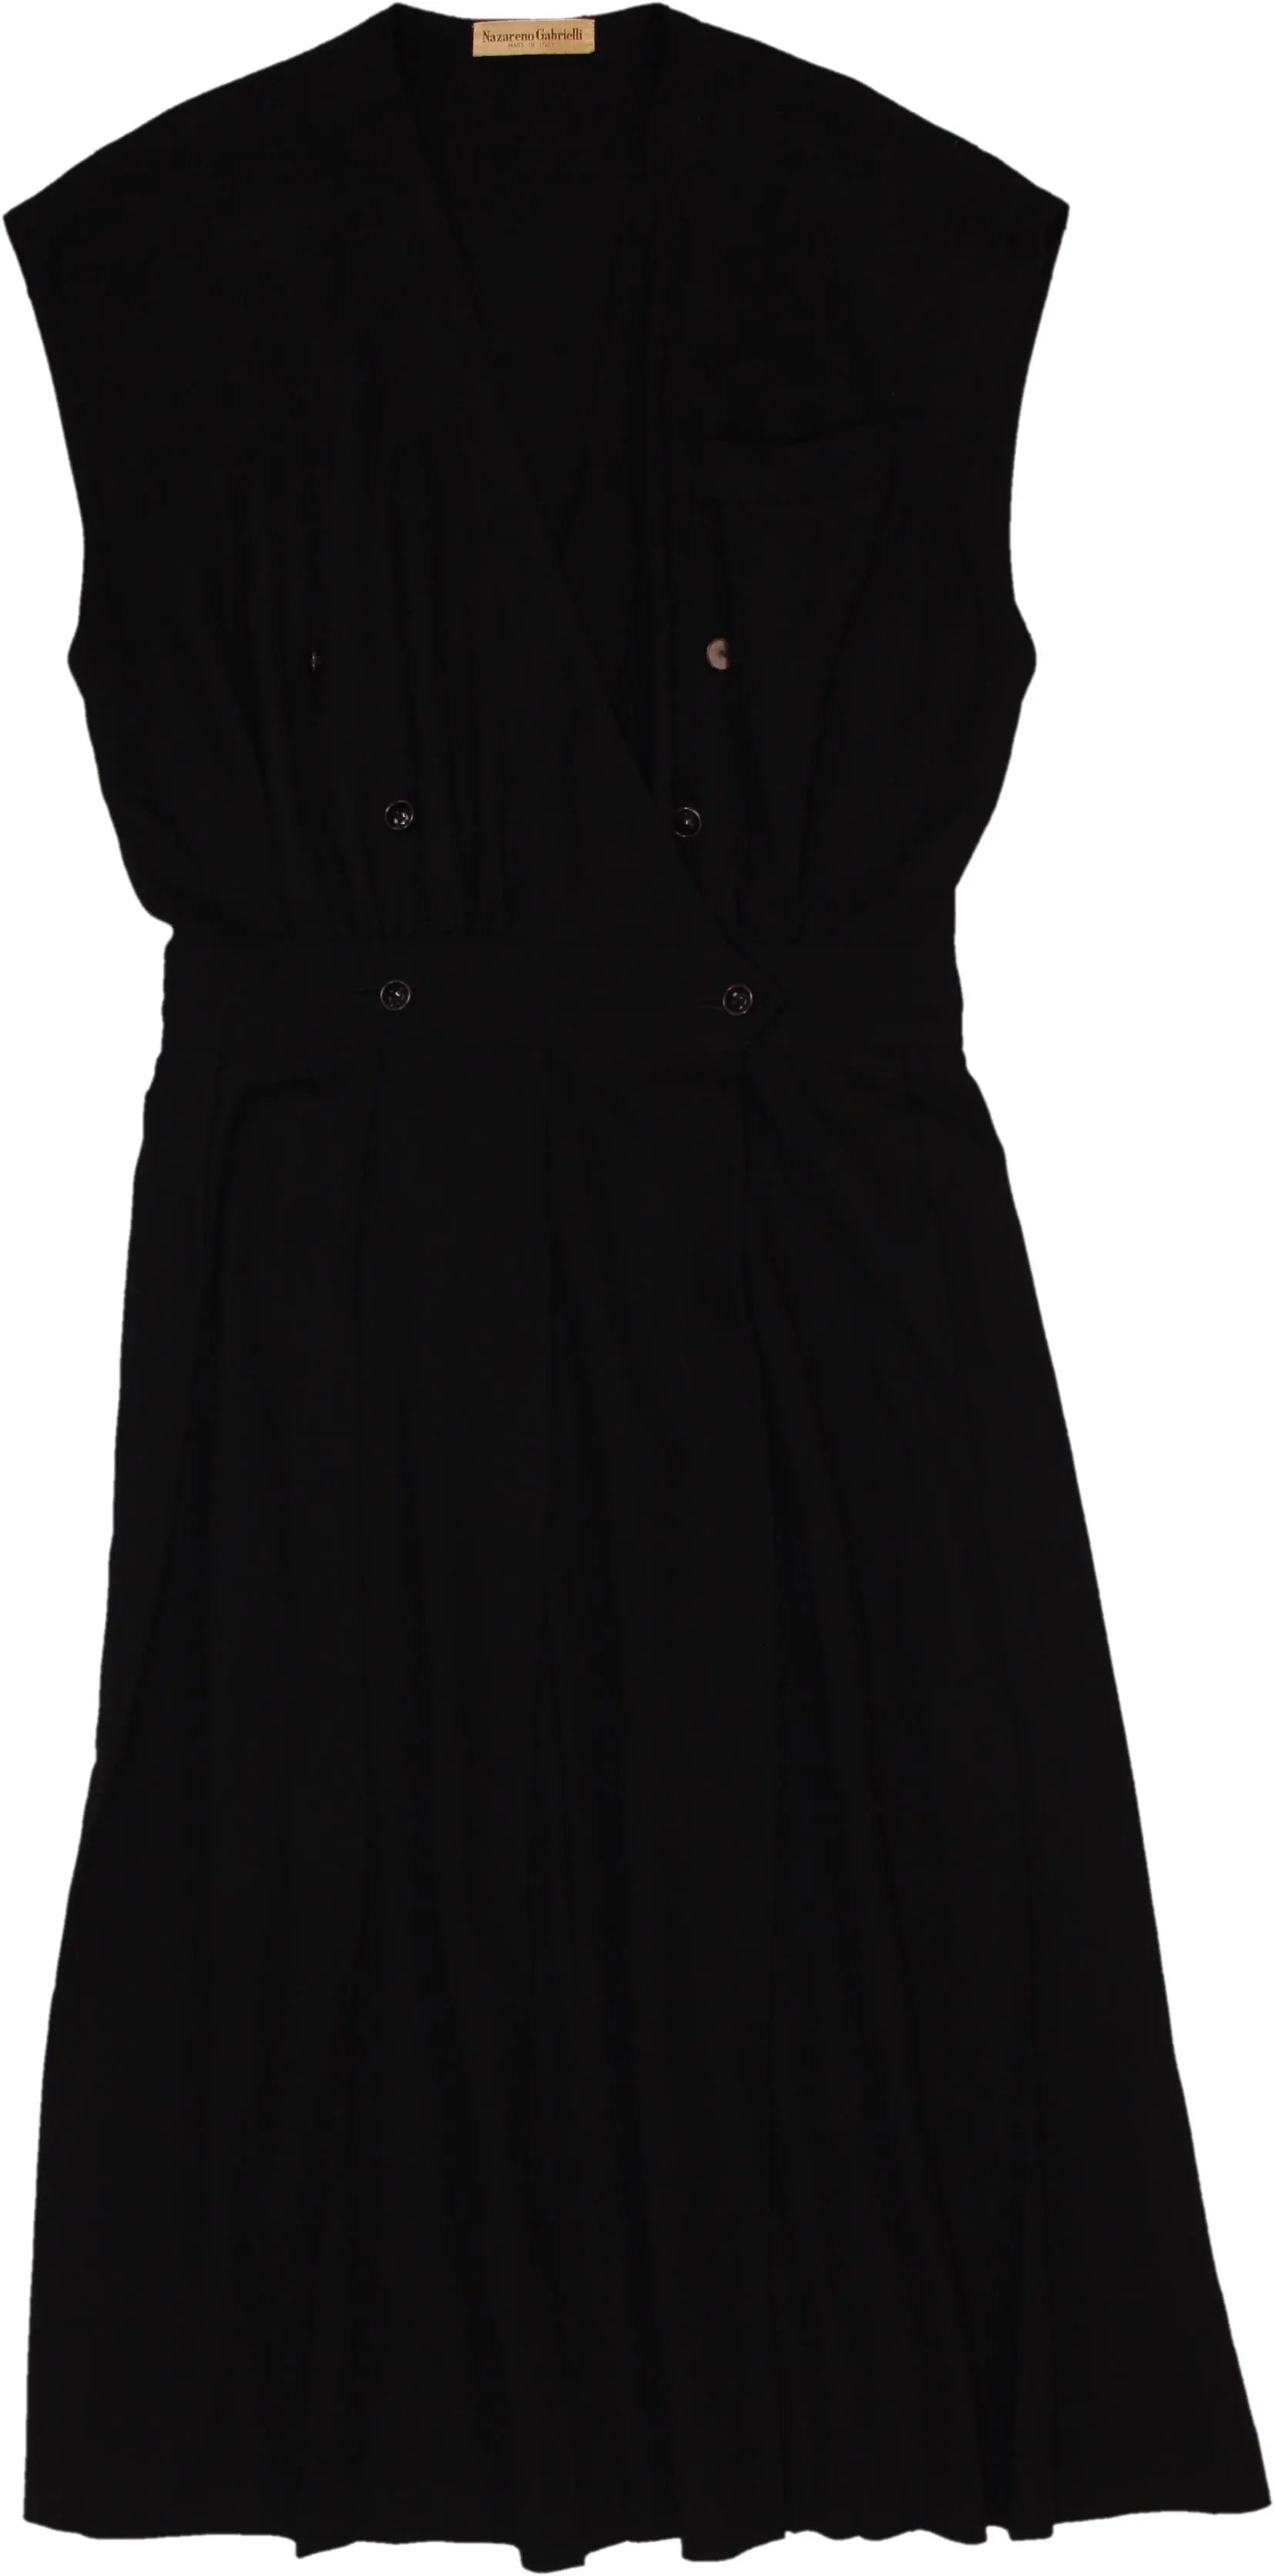 Nazareno Gabrielli - Black Dress by Nazareno Gabrielli- ThriftTale.com - Vintage and second handclothing